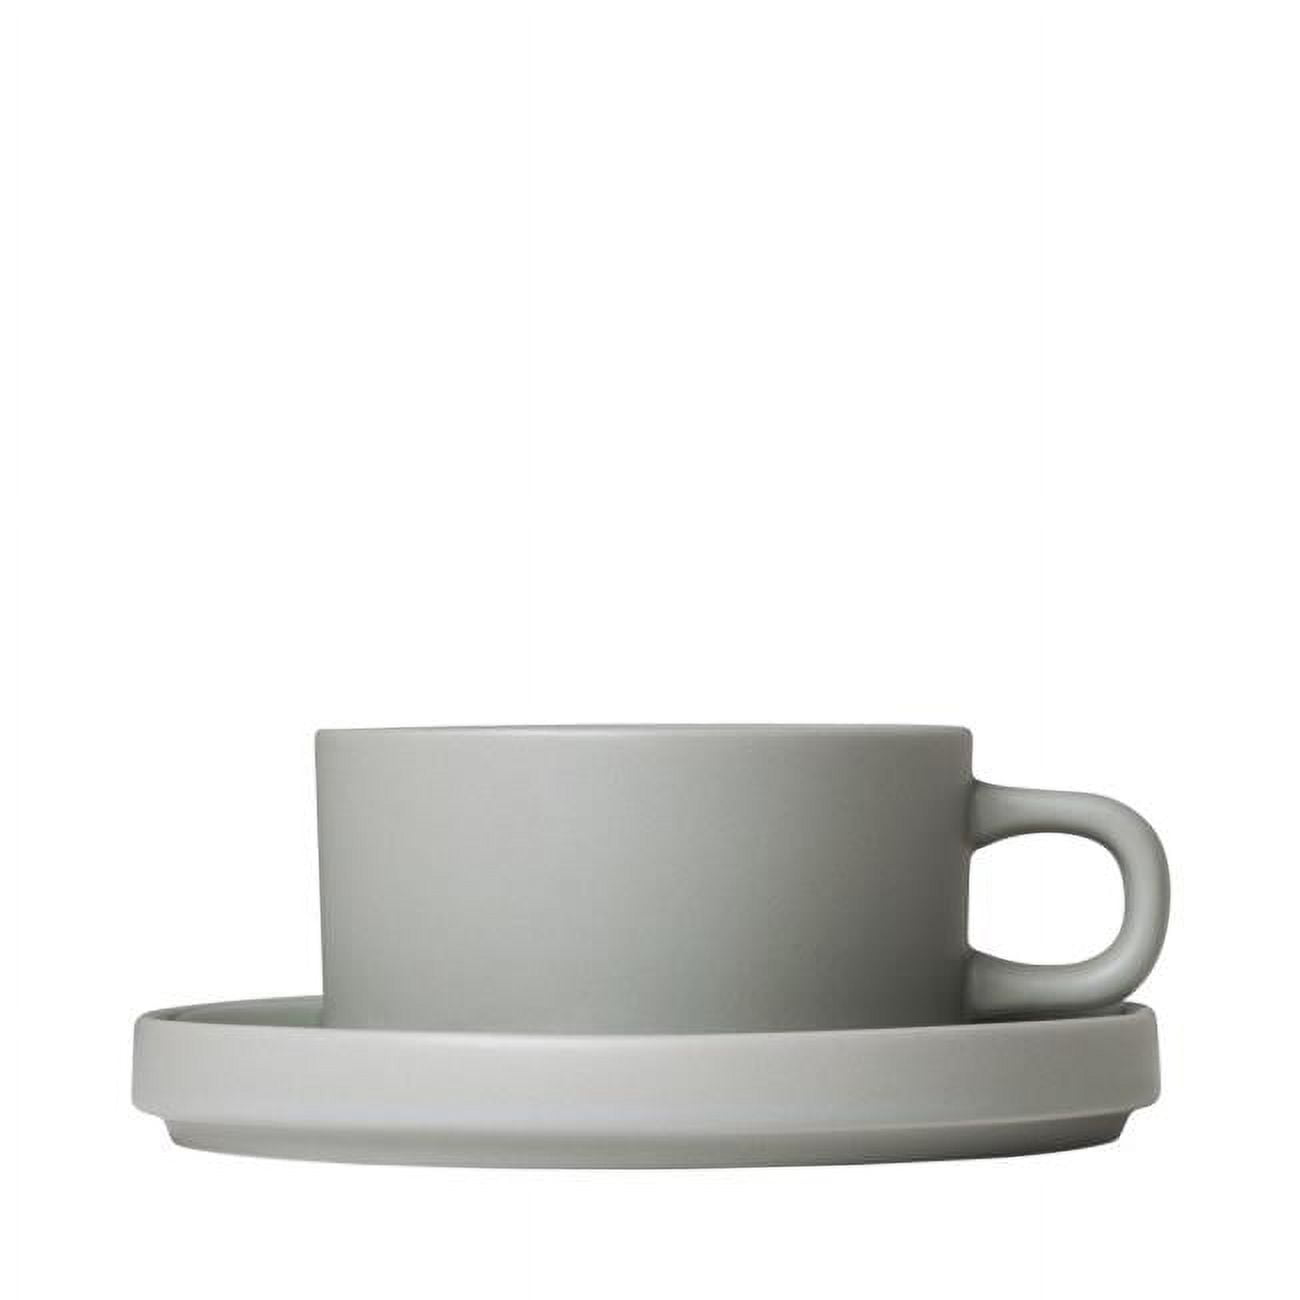 63912 6 Oz Mio Tea Cups With Saucers, Mirage Grey - Set Of 2